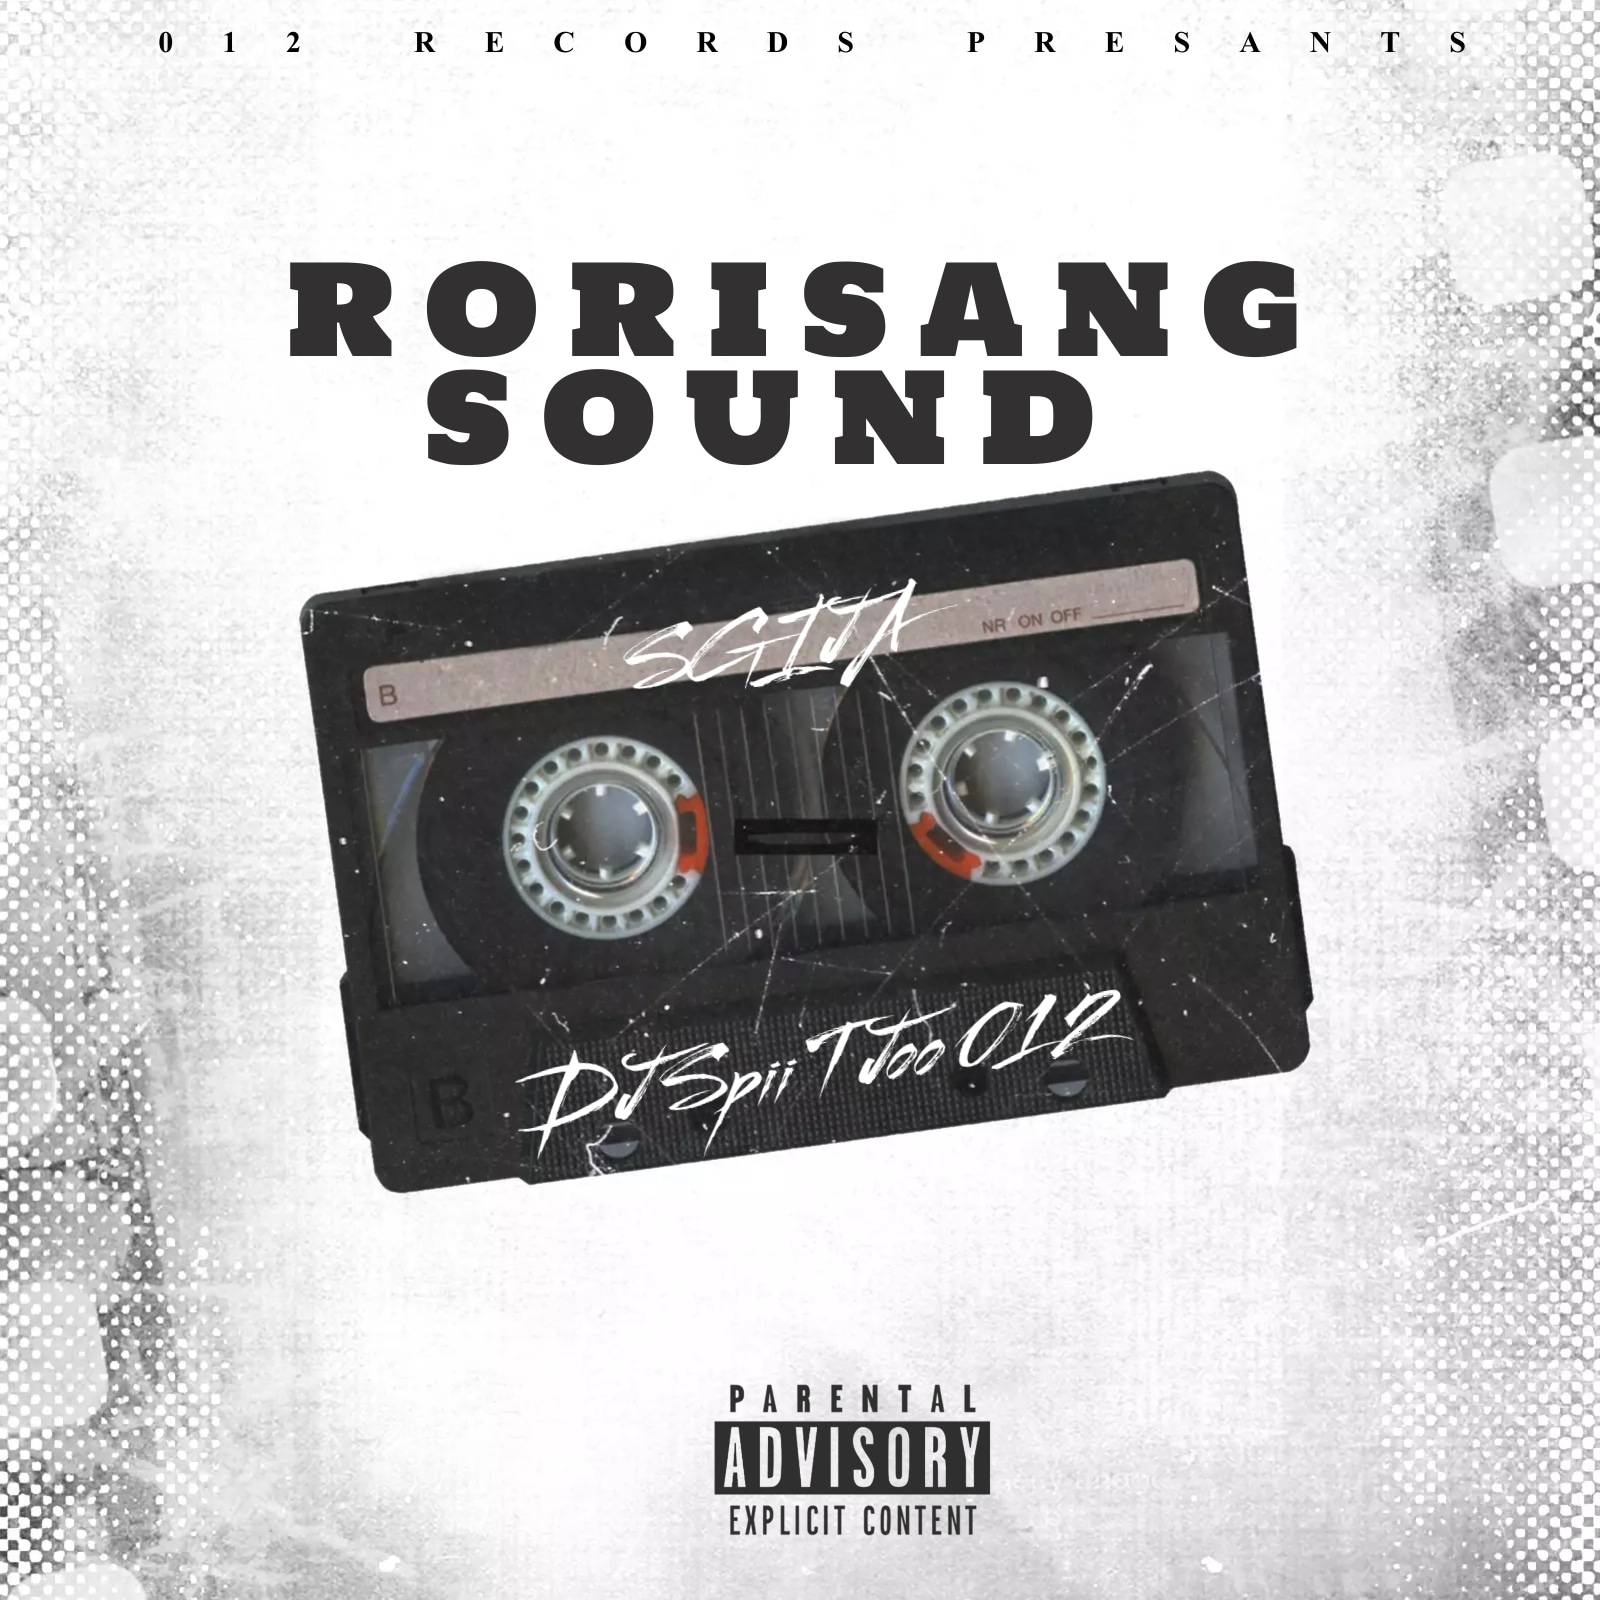 Rorisang Sound - DJ Spii T Joo